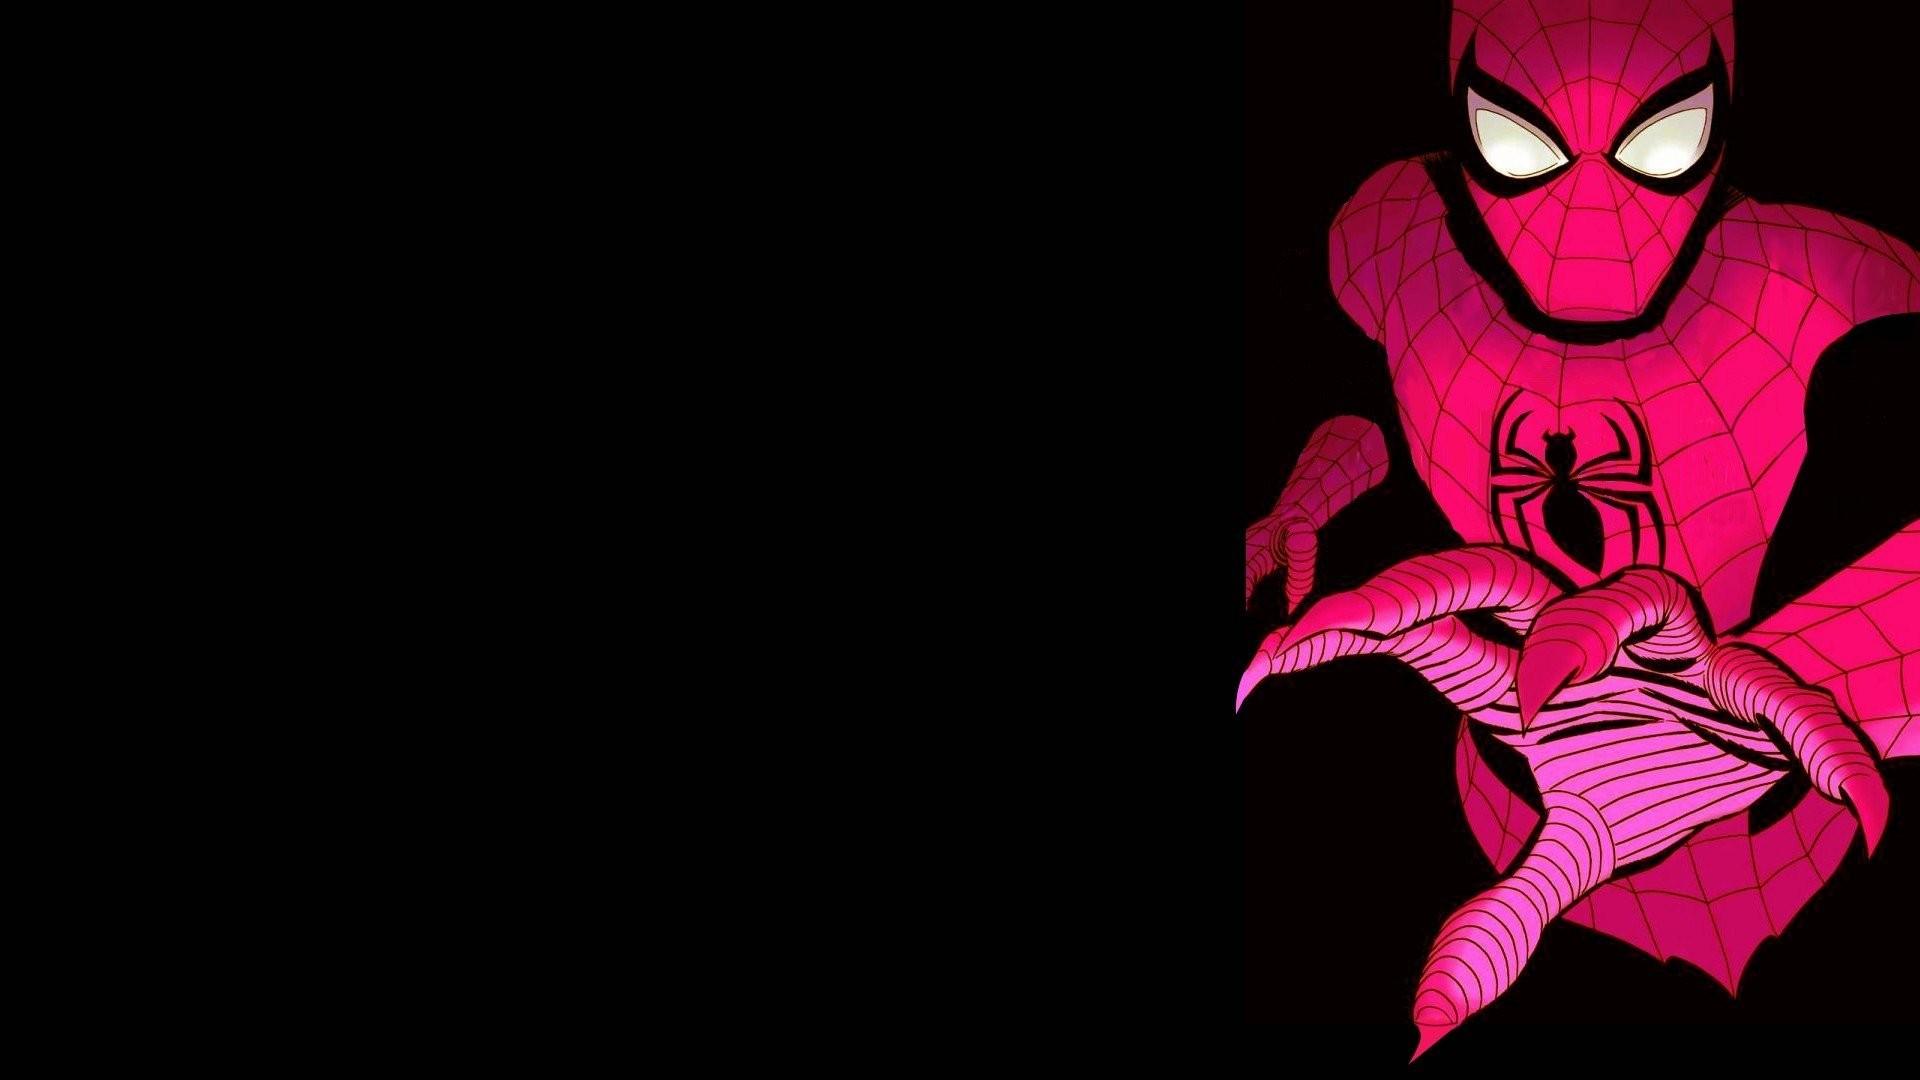 Superior Spiderman Wallpaper HD